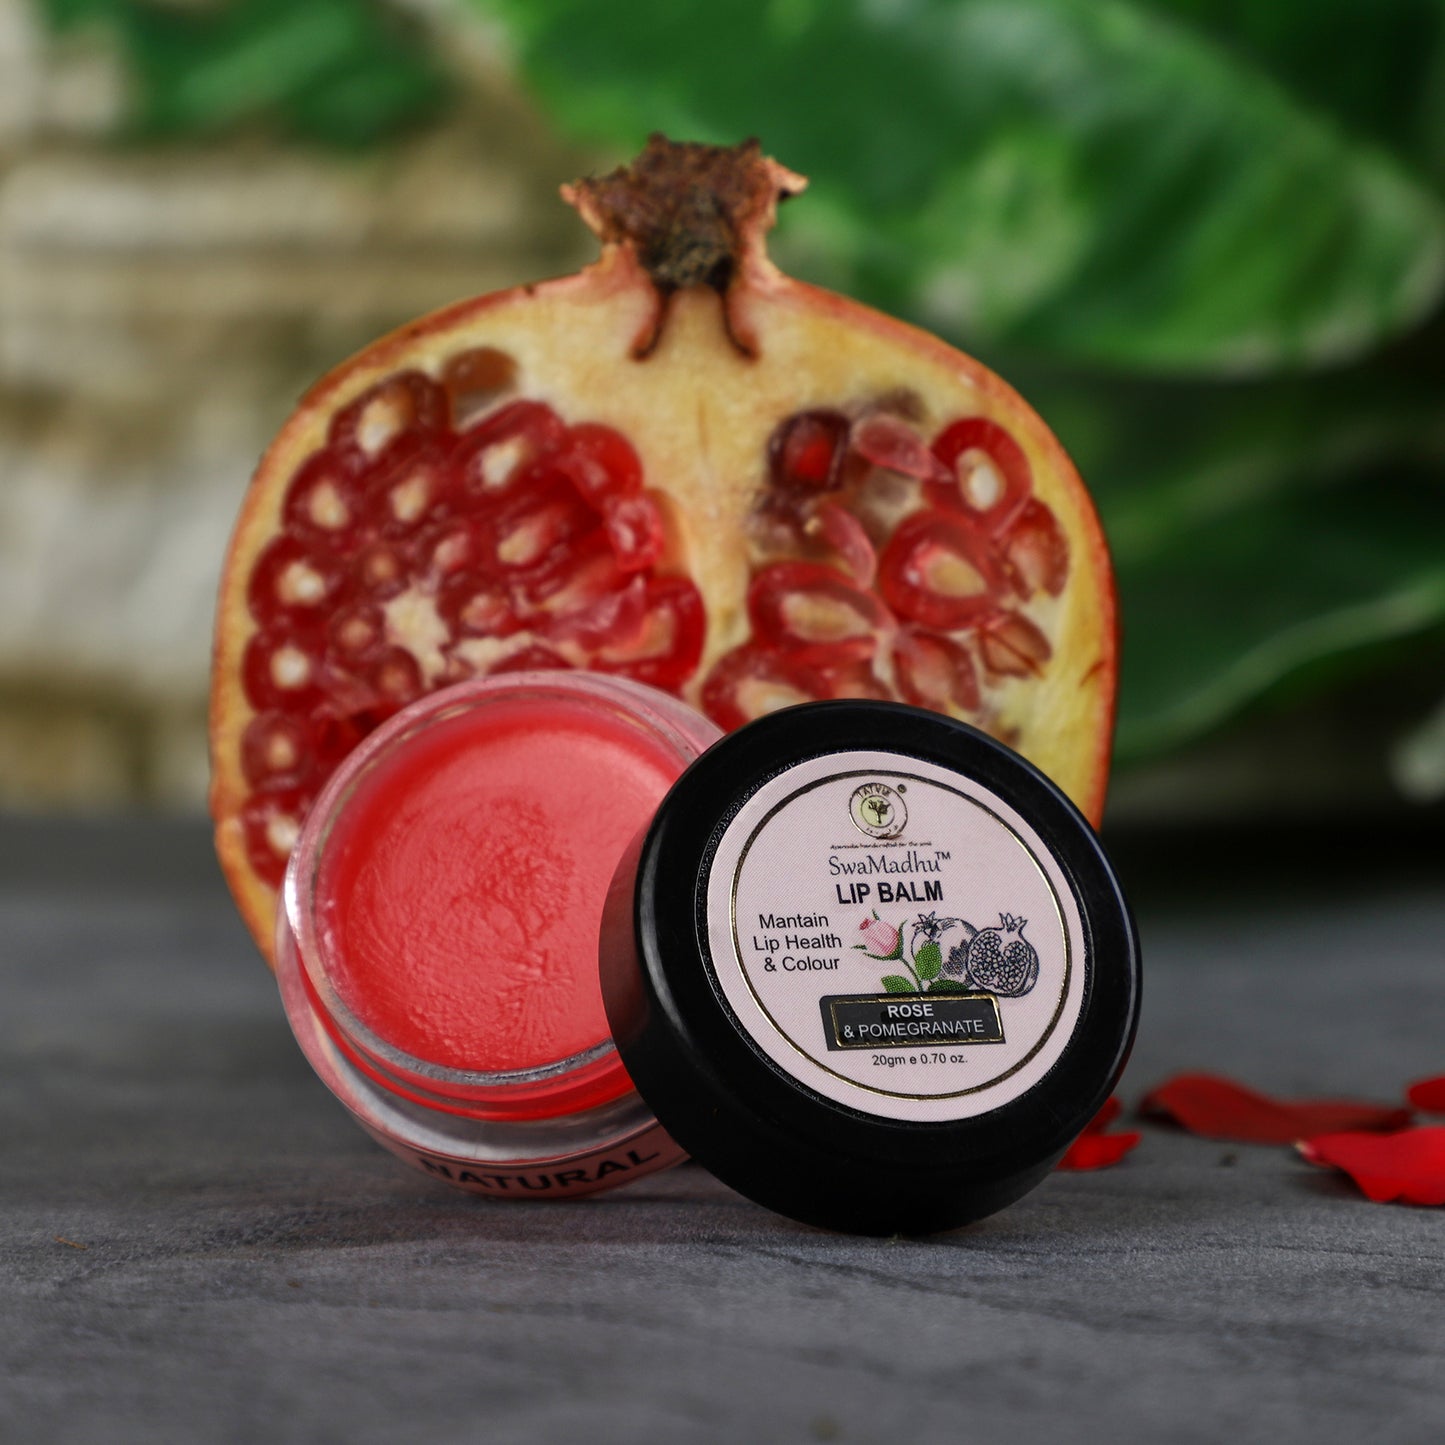 SwaMadhu Rose & Pomegranate - Lip Balm and Tint